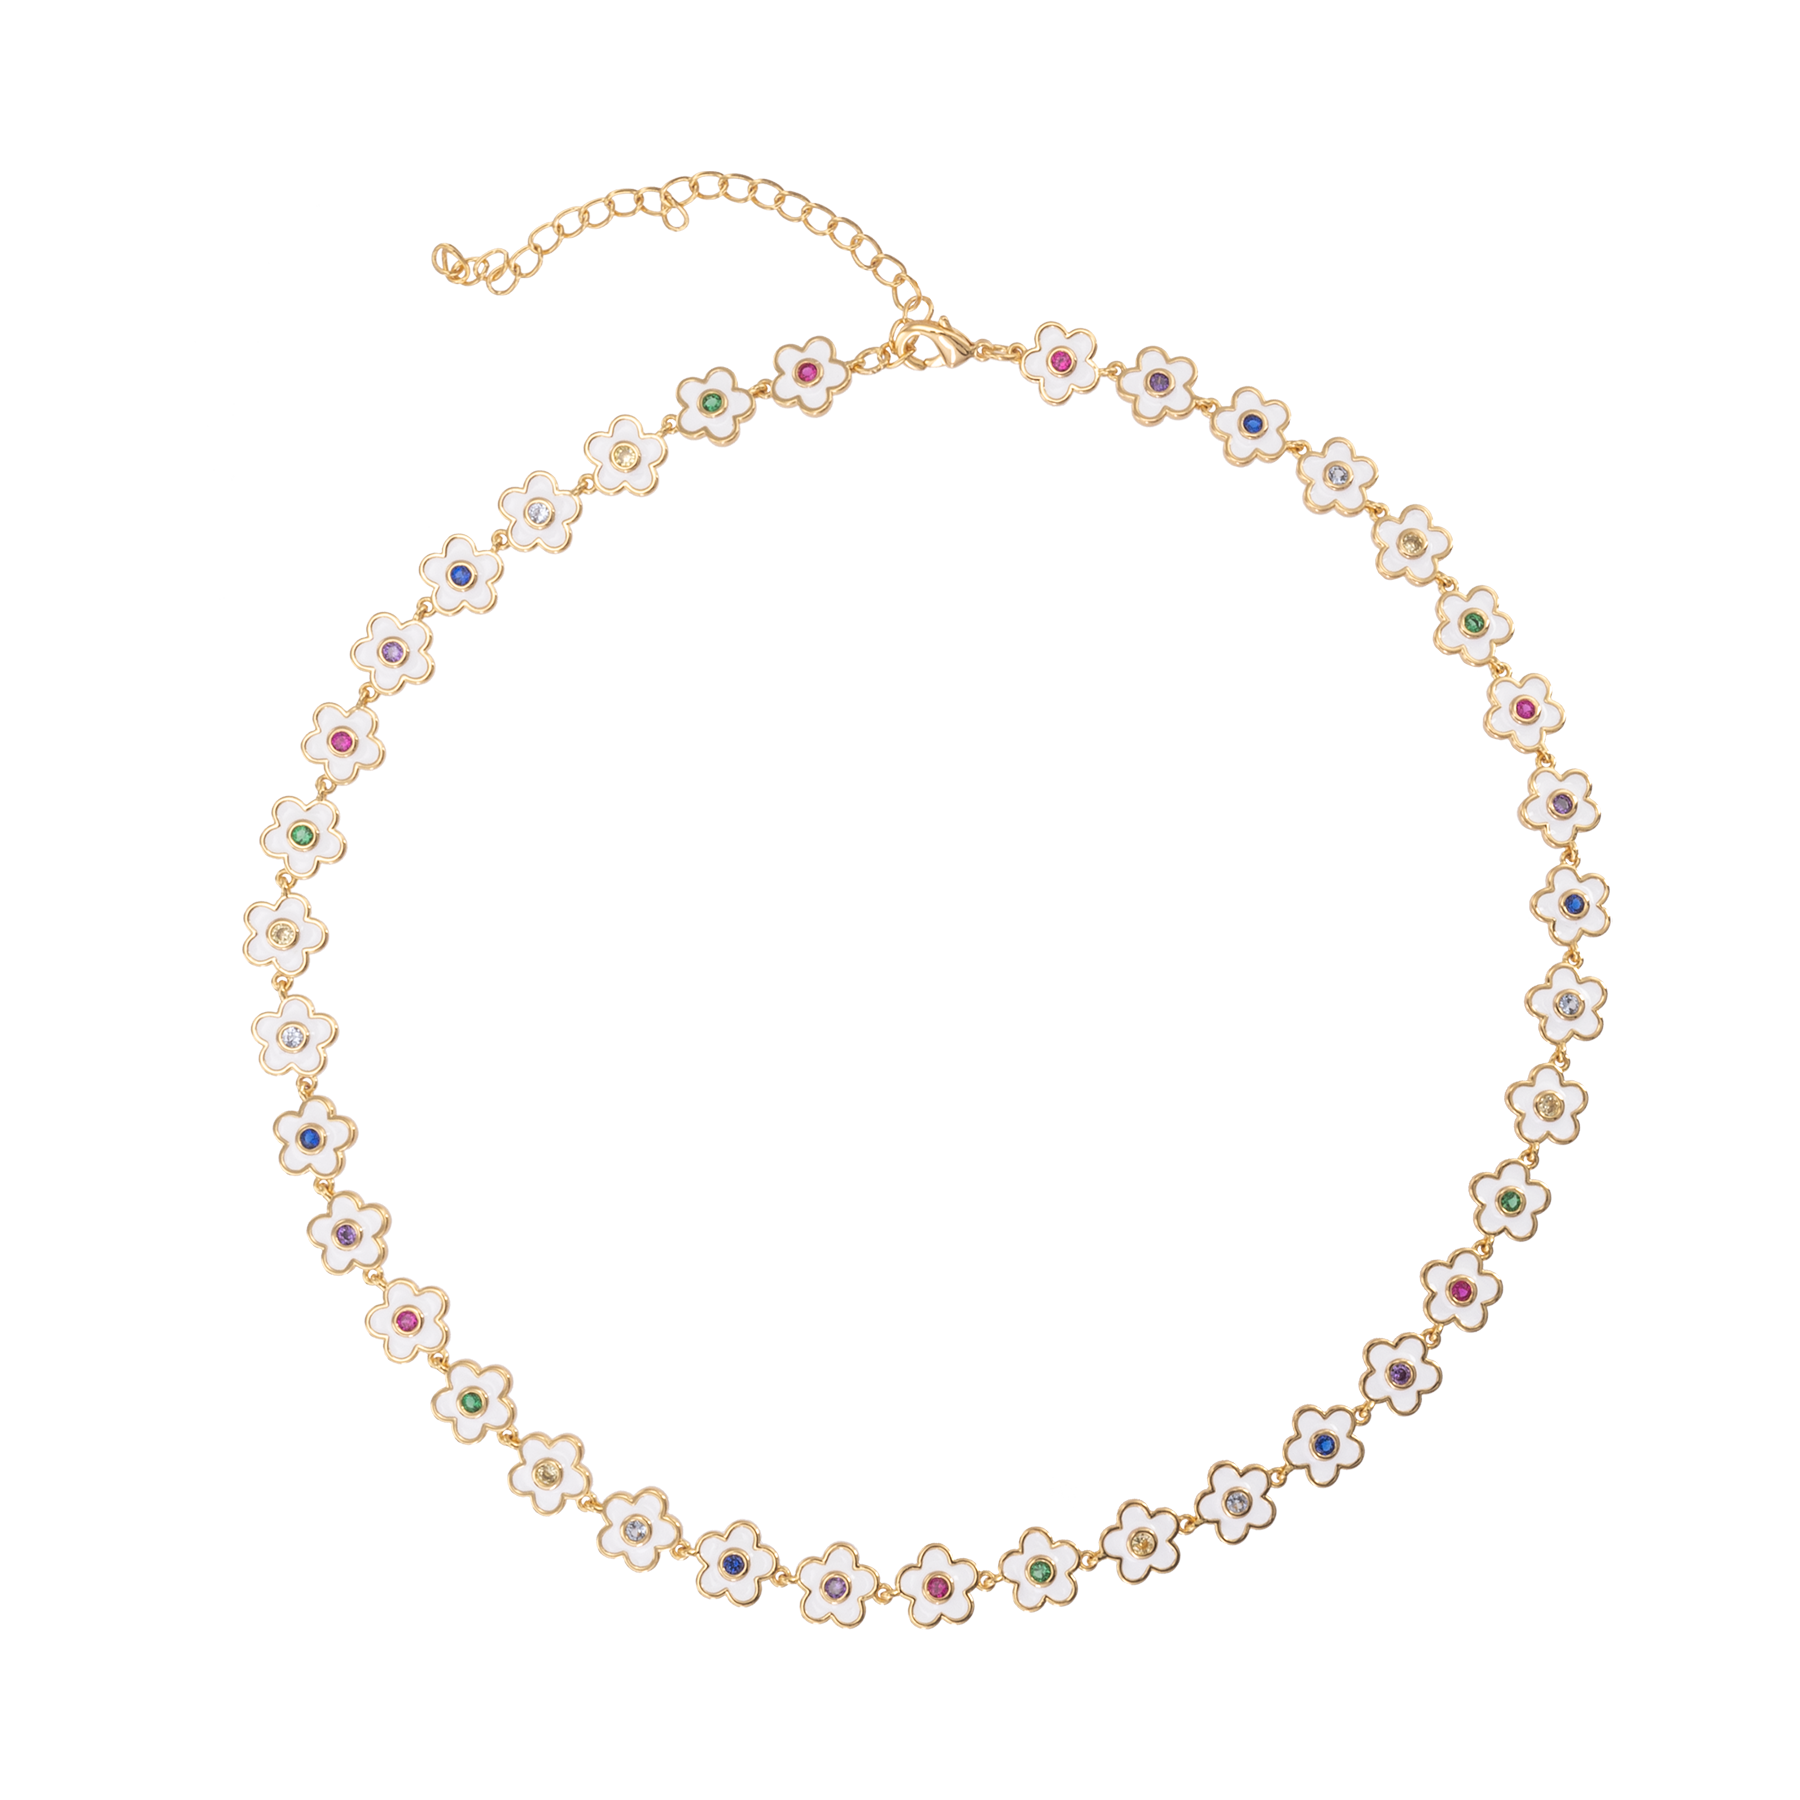 Image of Ingerline necklace from Emilia by Bon Dep